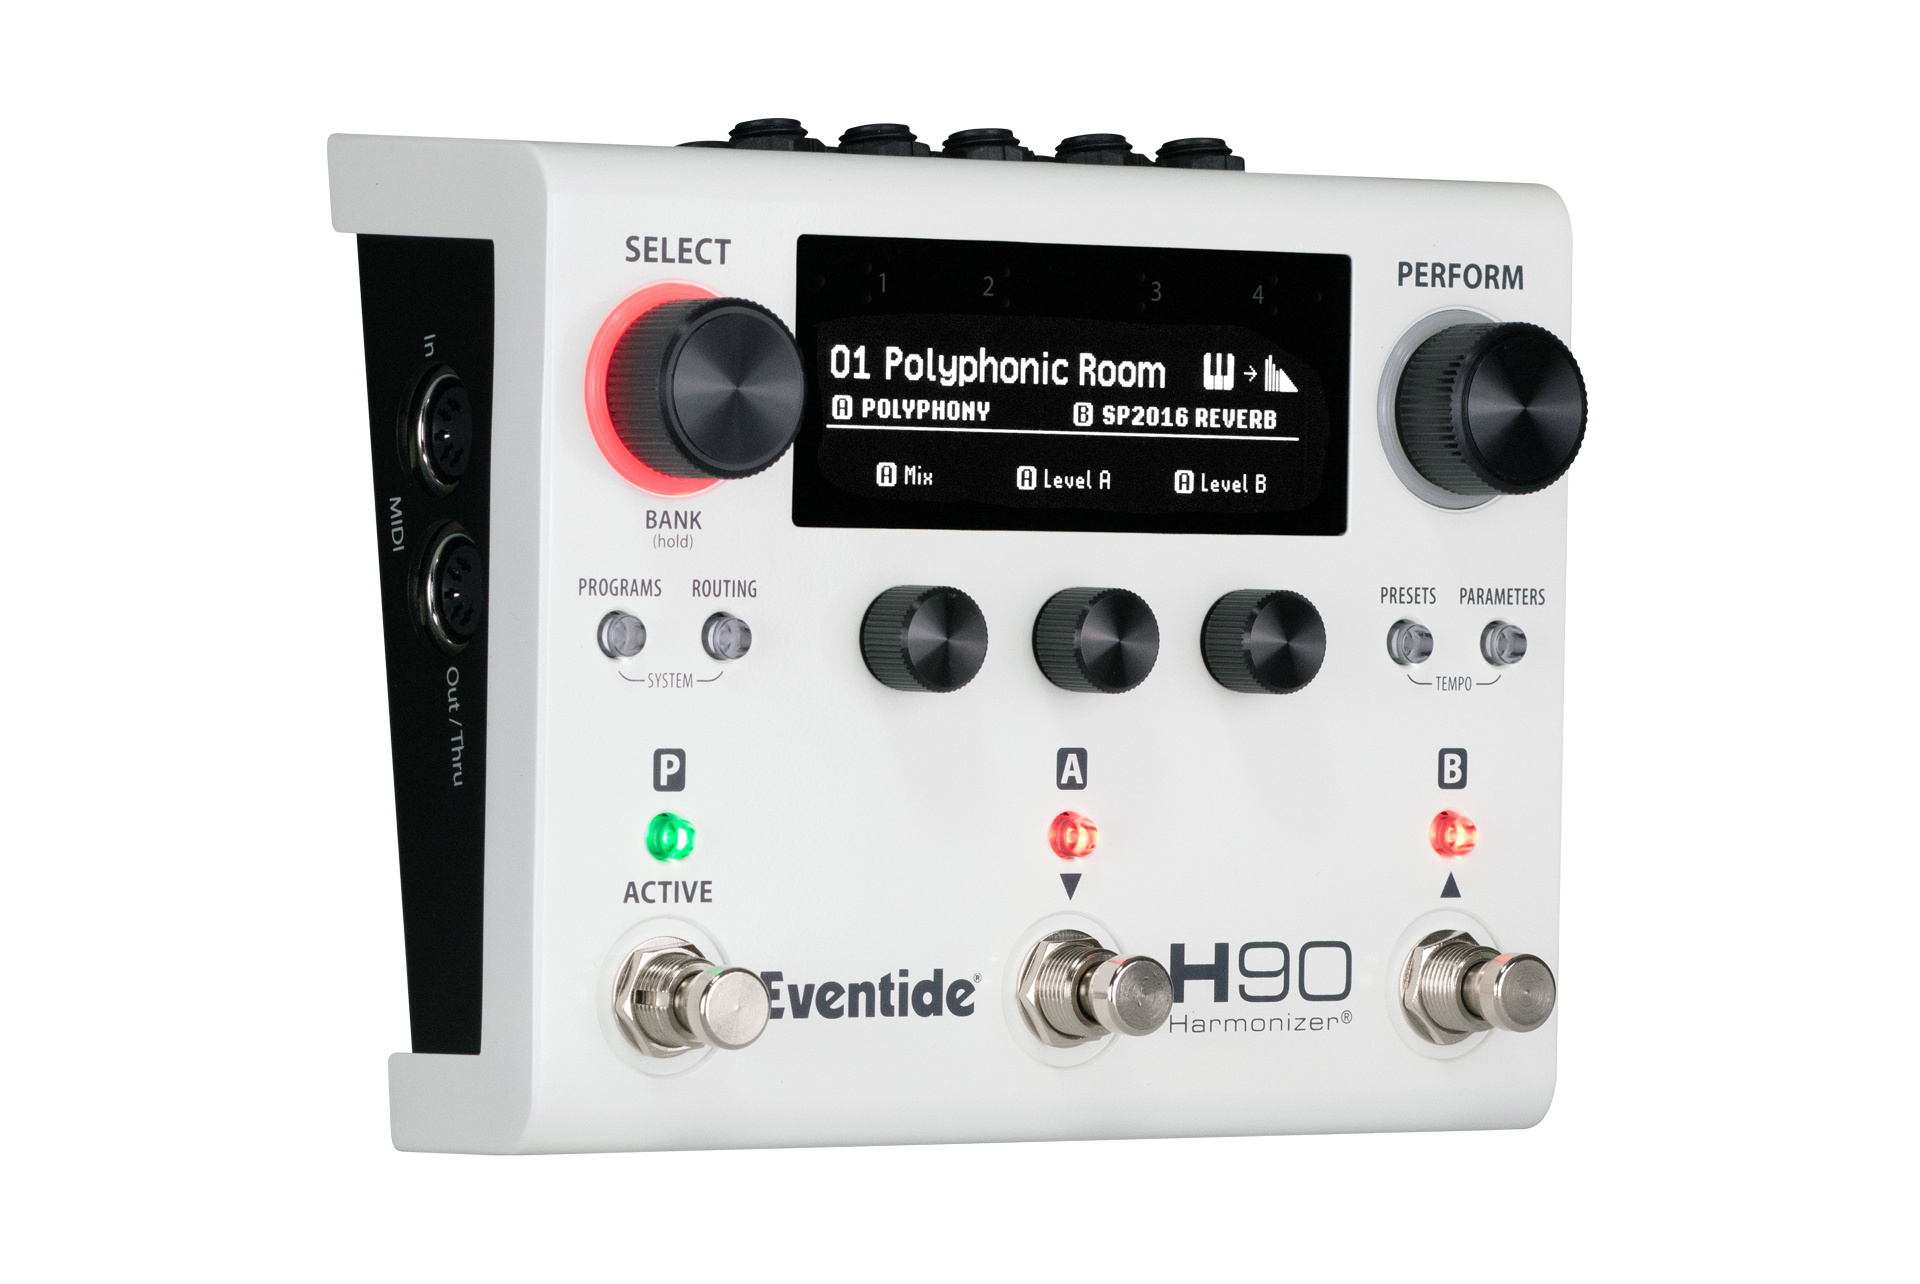 Eventide H90 Harmonizer Next-Generation Multi-Effects Pedal